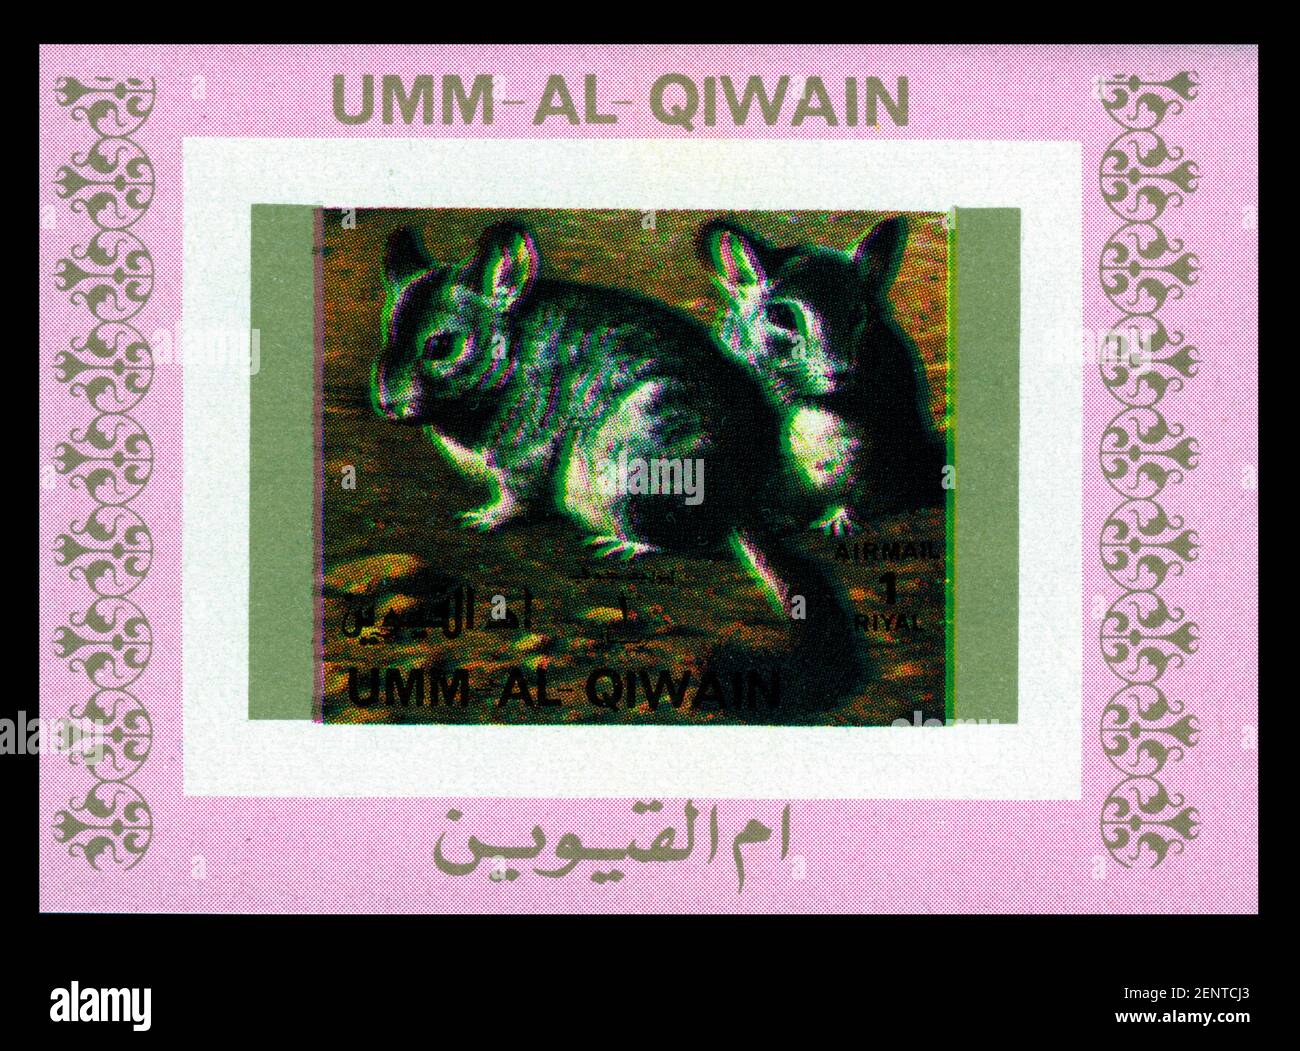 Stamp print in Umm al-Qaiwain, emirate, UAE,animals,chinchillas Stock Photo